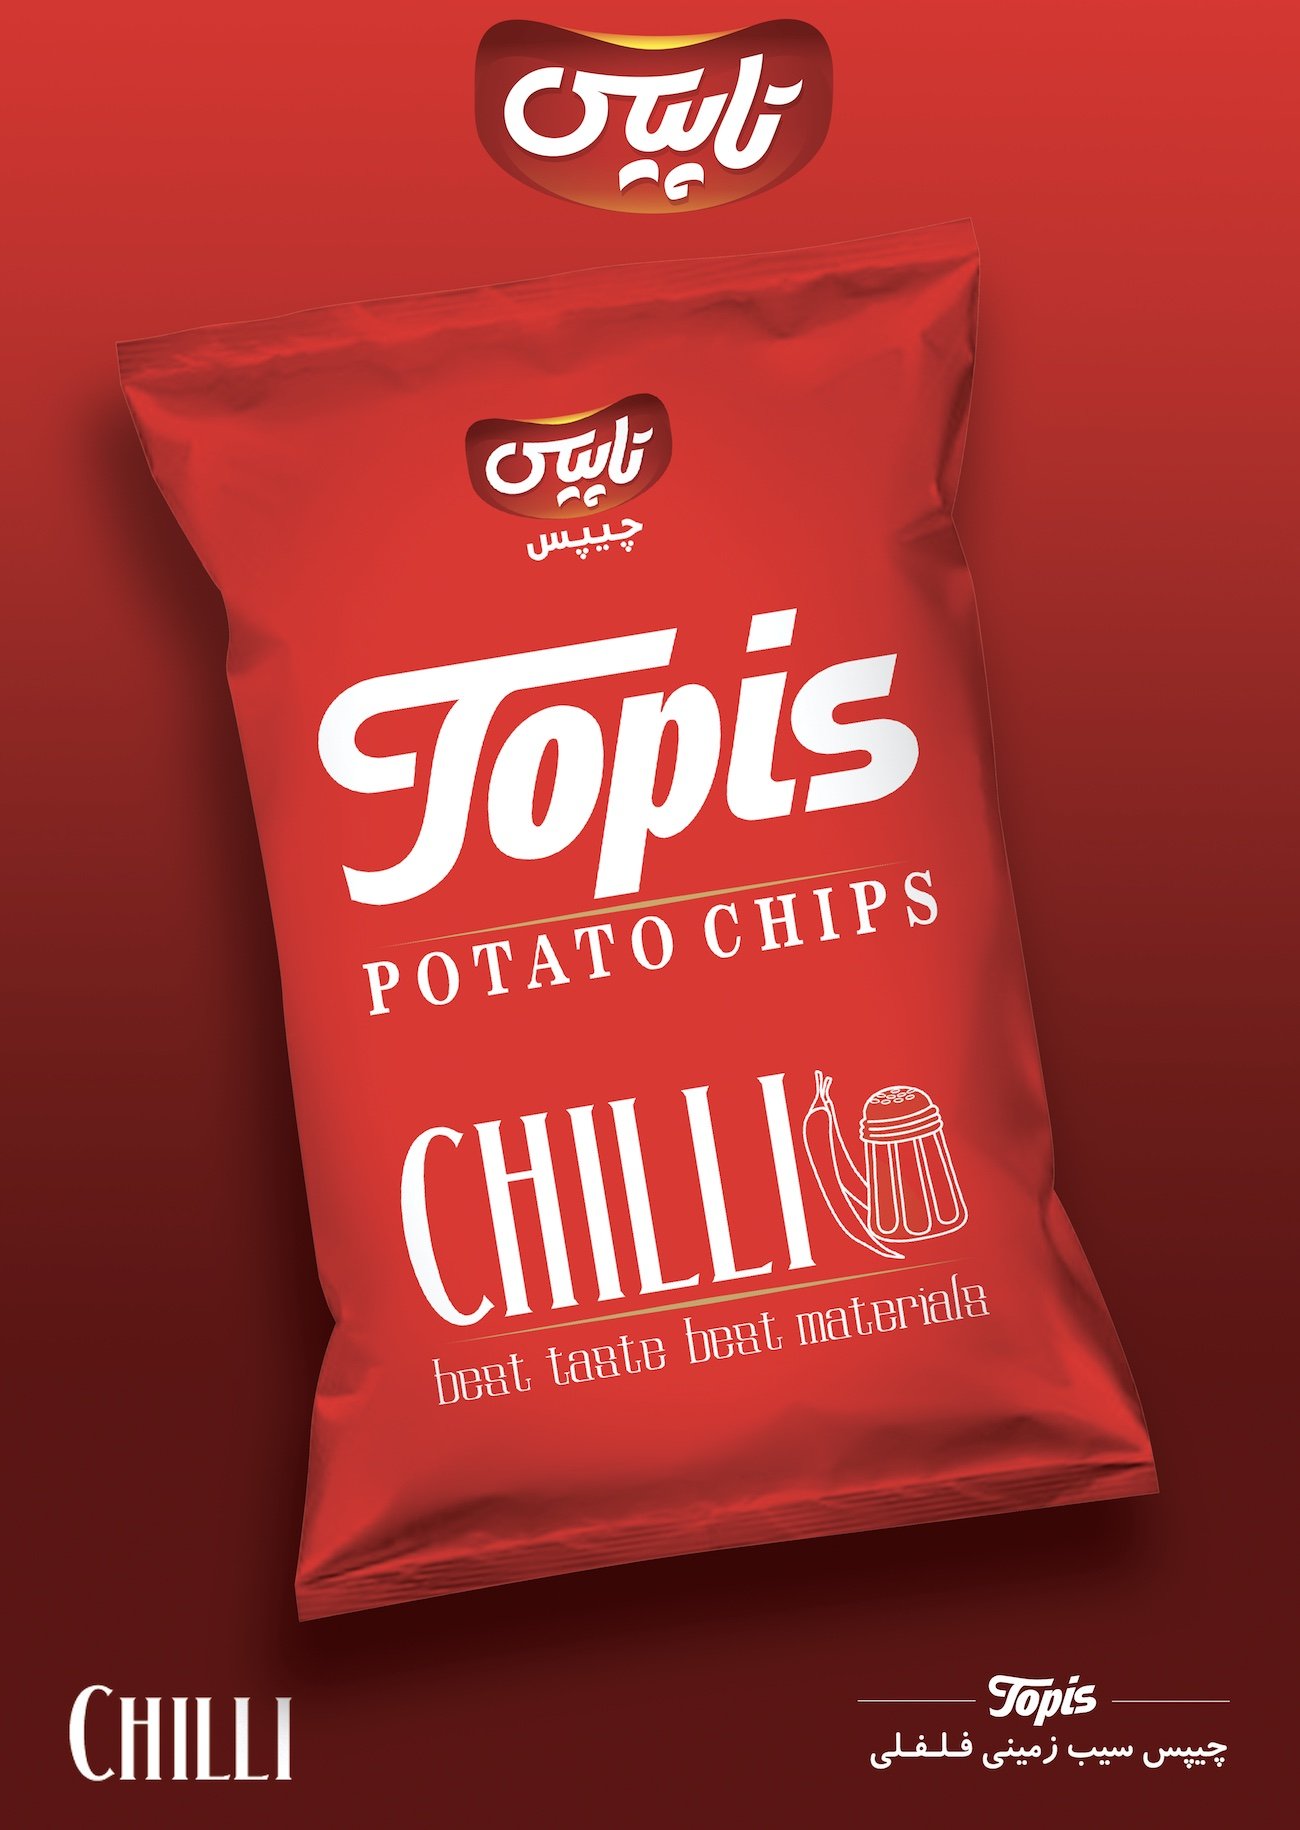 Pepper potato chips